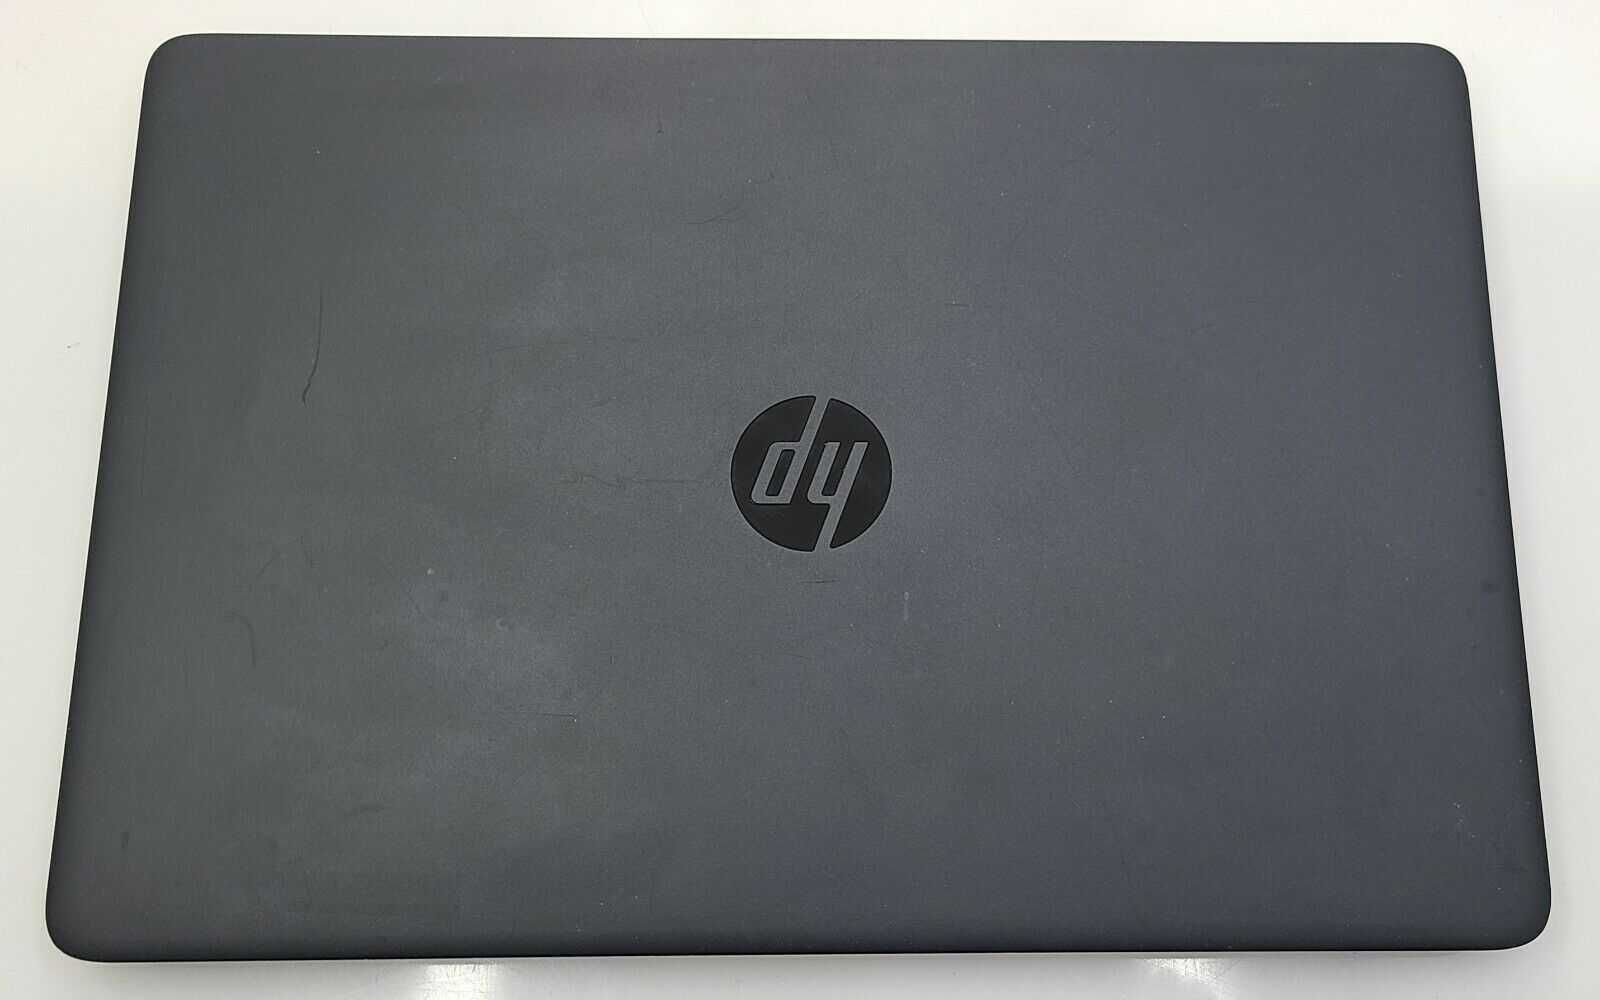 Лаптоп HP 450 G1 I5-4200M 4GB 500GB HDD 15.6 HD Windows 10